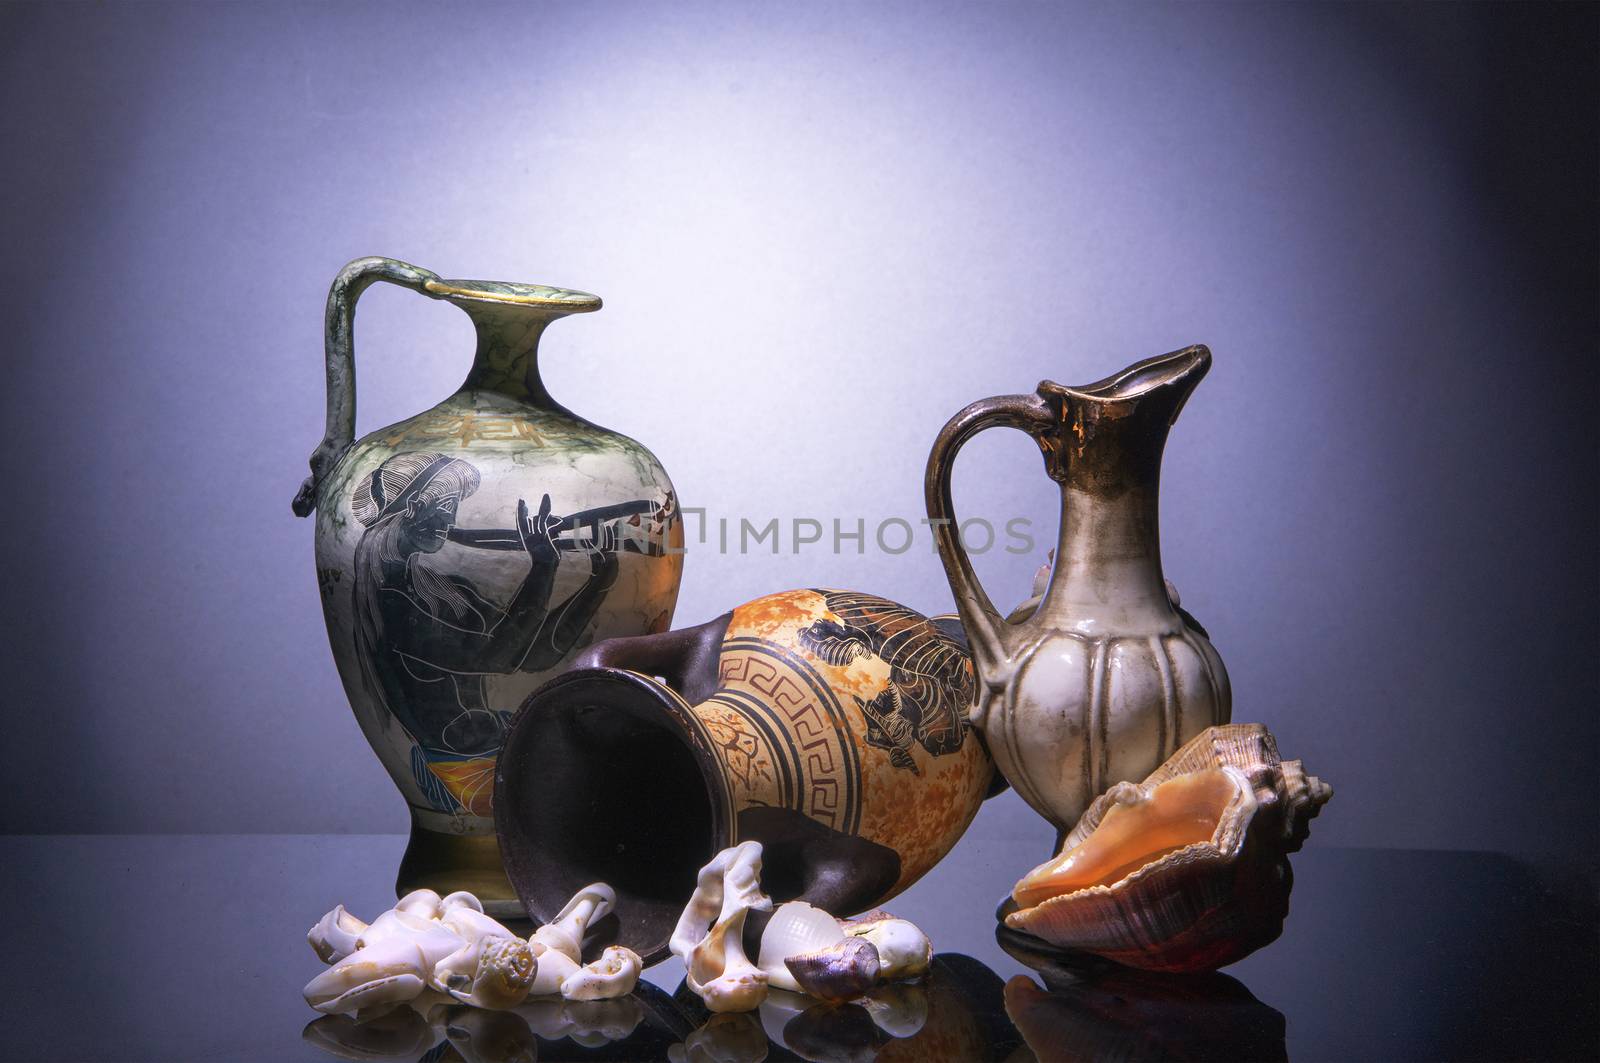 Amphora, the jug and sea shells by ben44